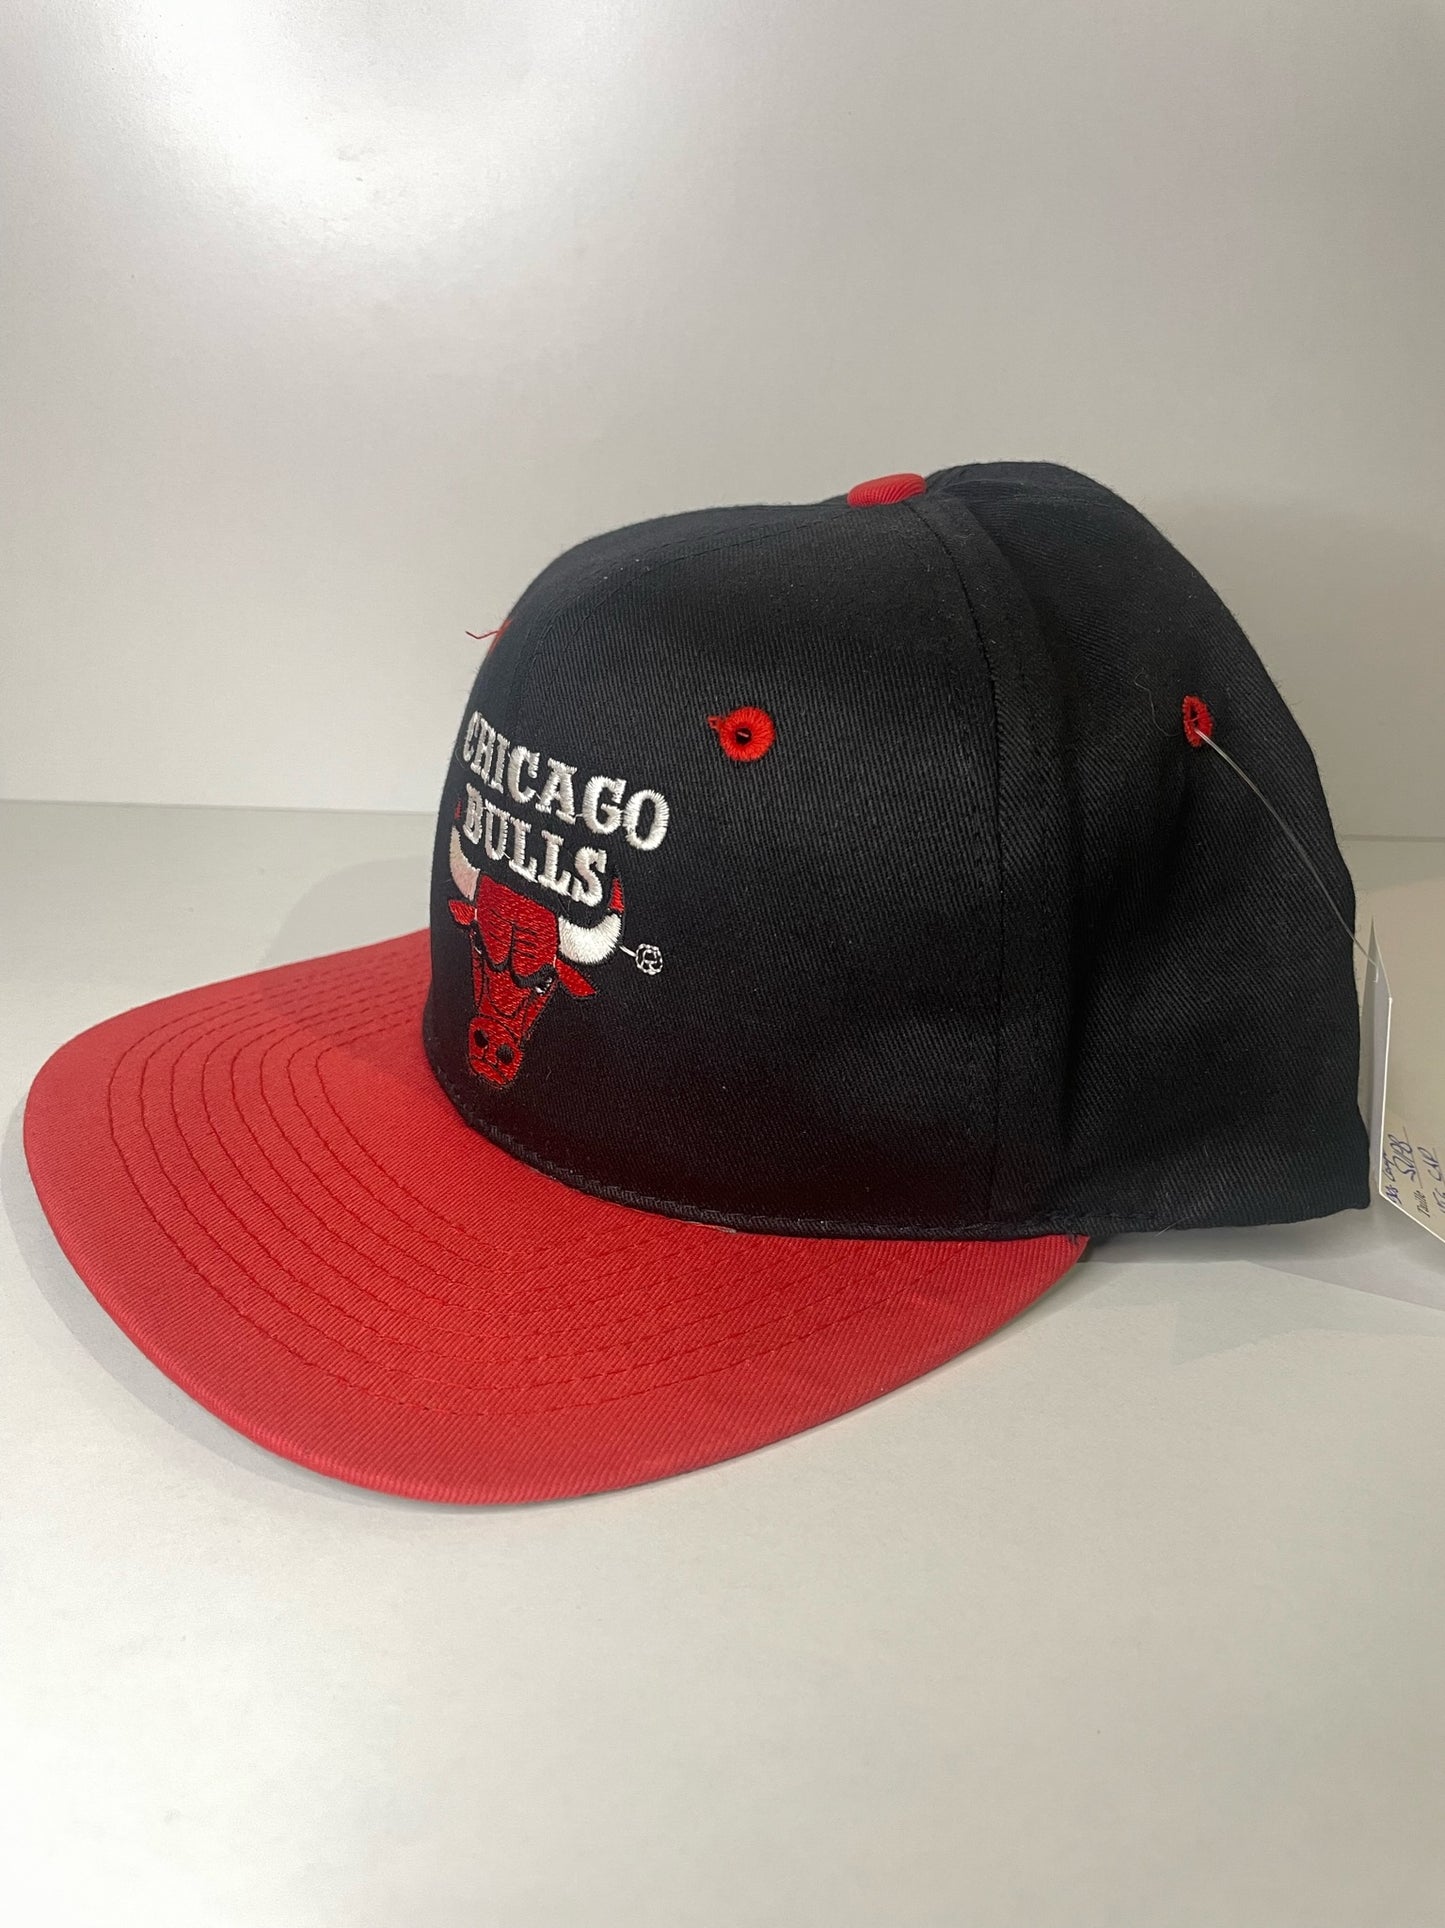 VINTAGE 90s CHICAGO BULLS COMPETITOR SNAPBACK CAP HAT